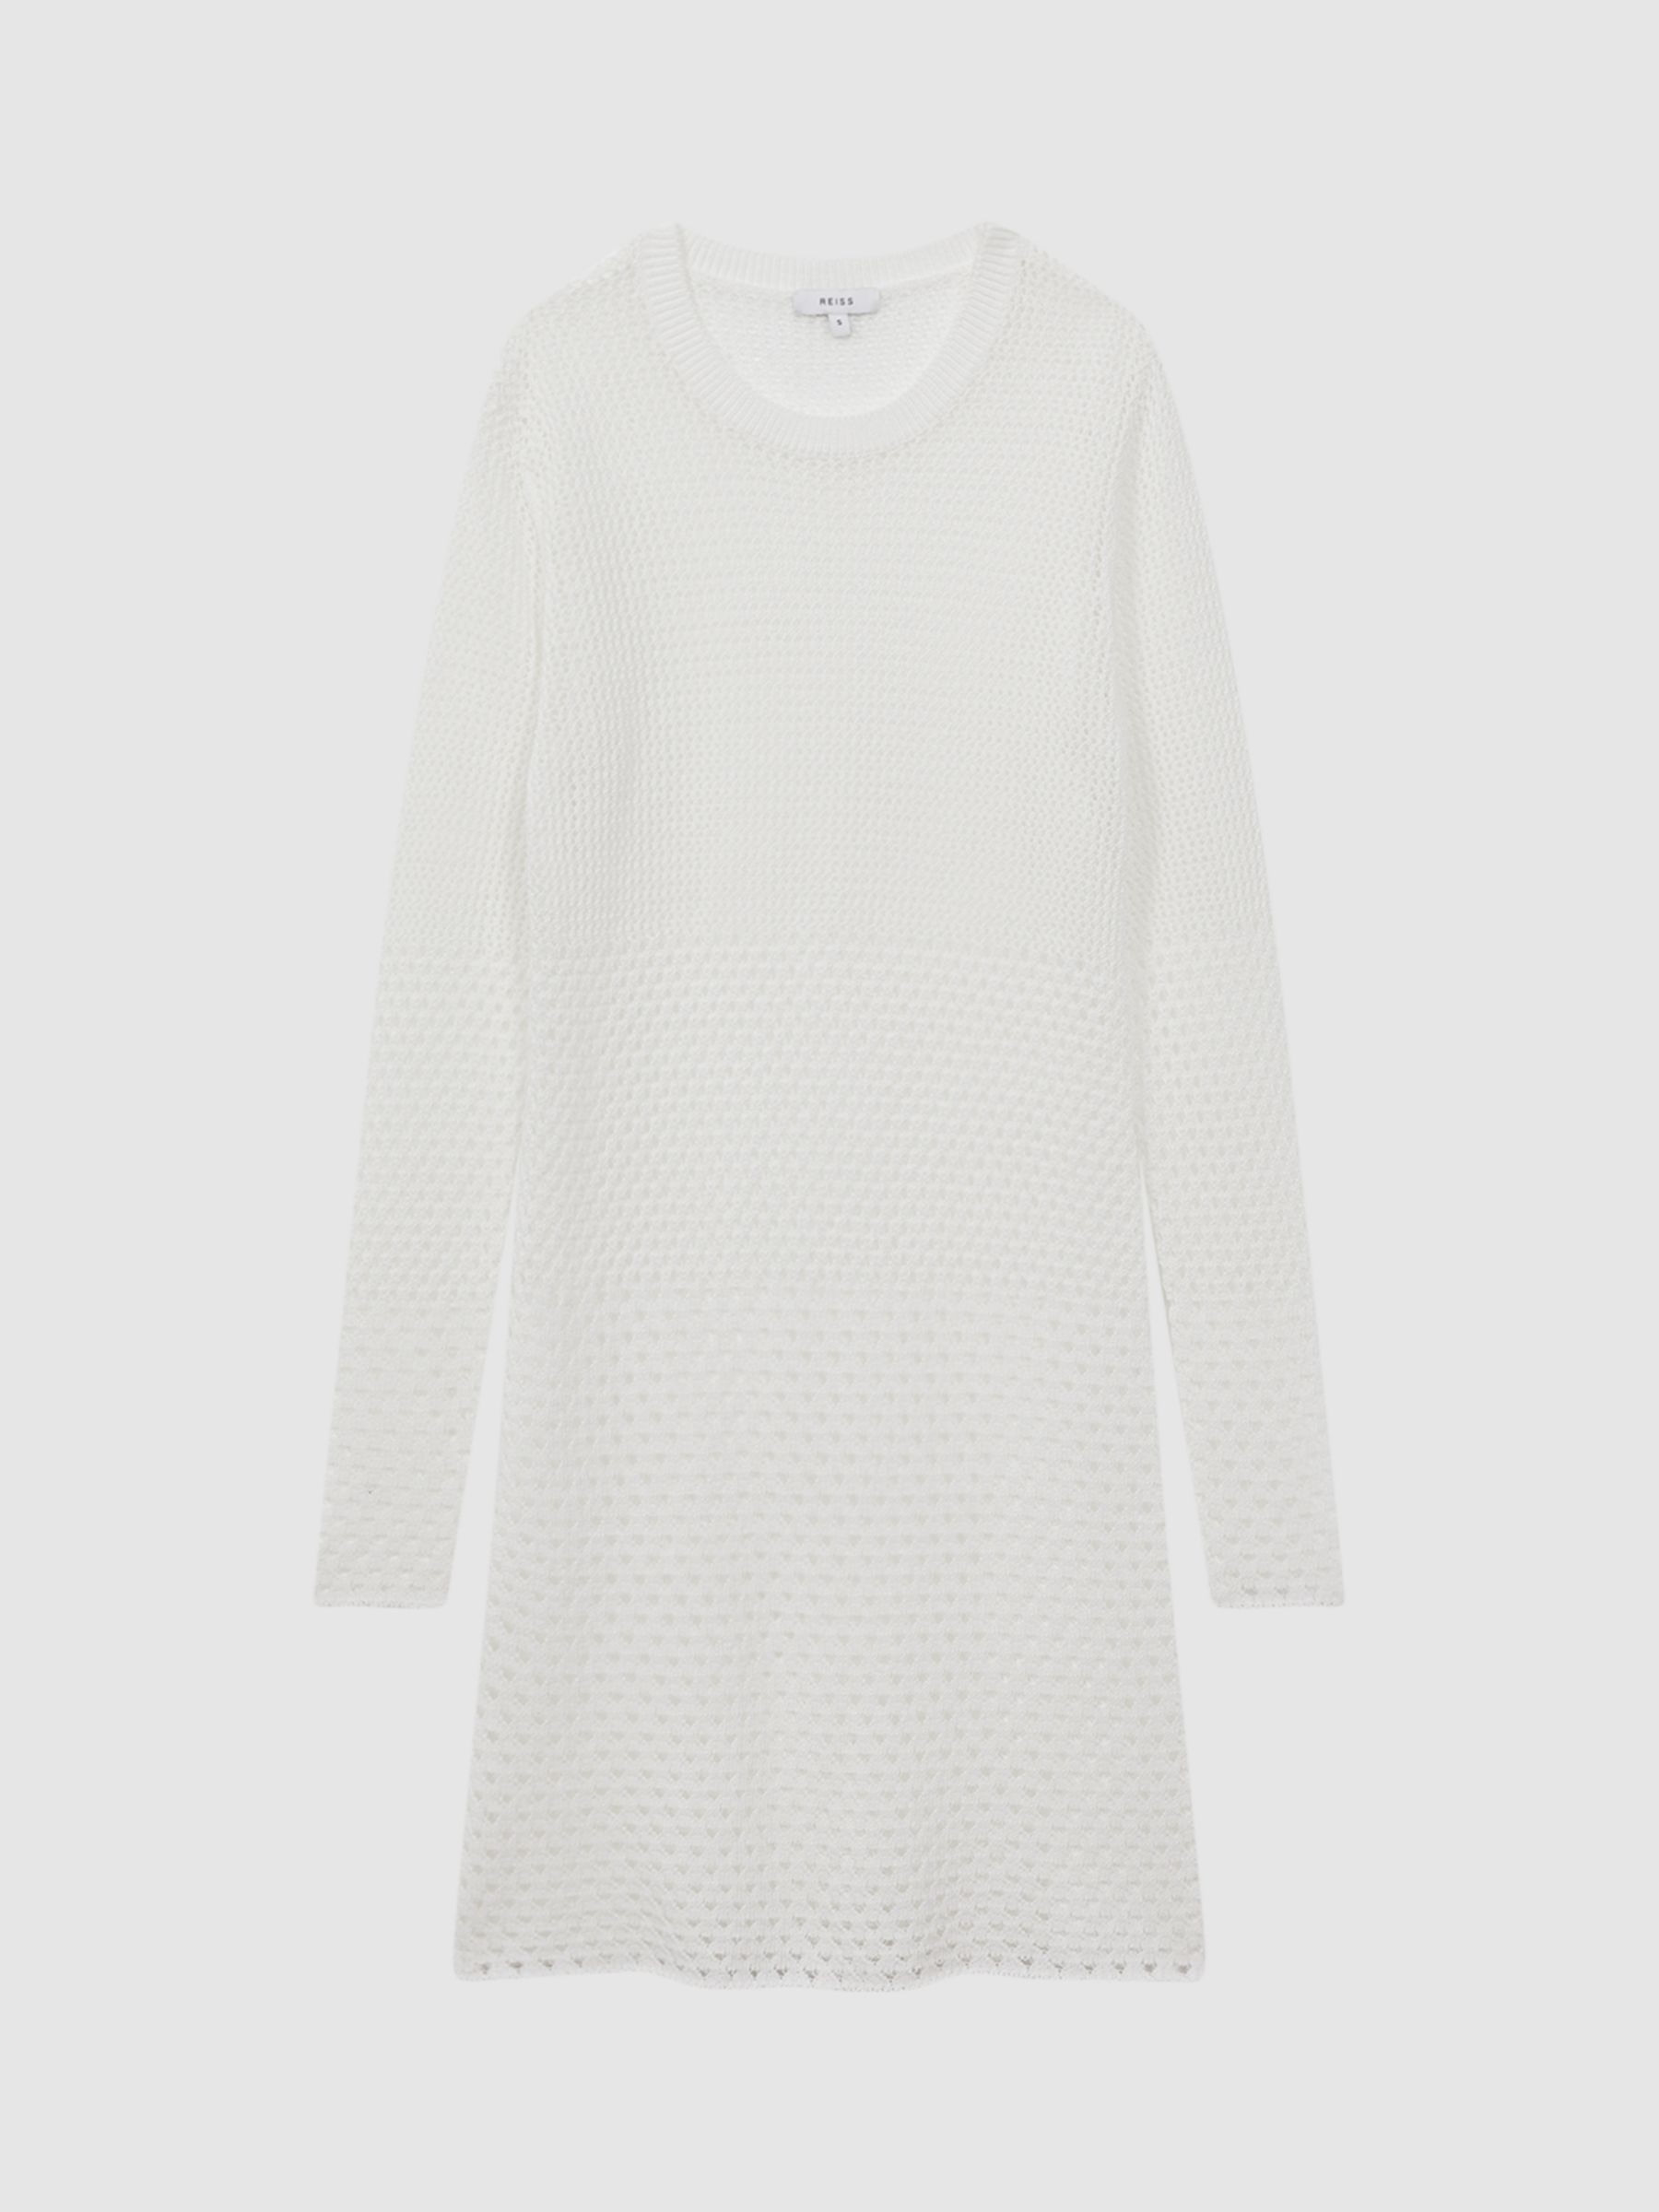 Reiss Esta Crochet Mini Dress, Cream, M